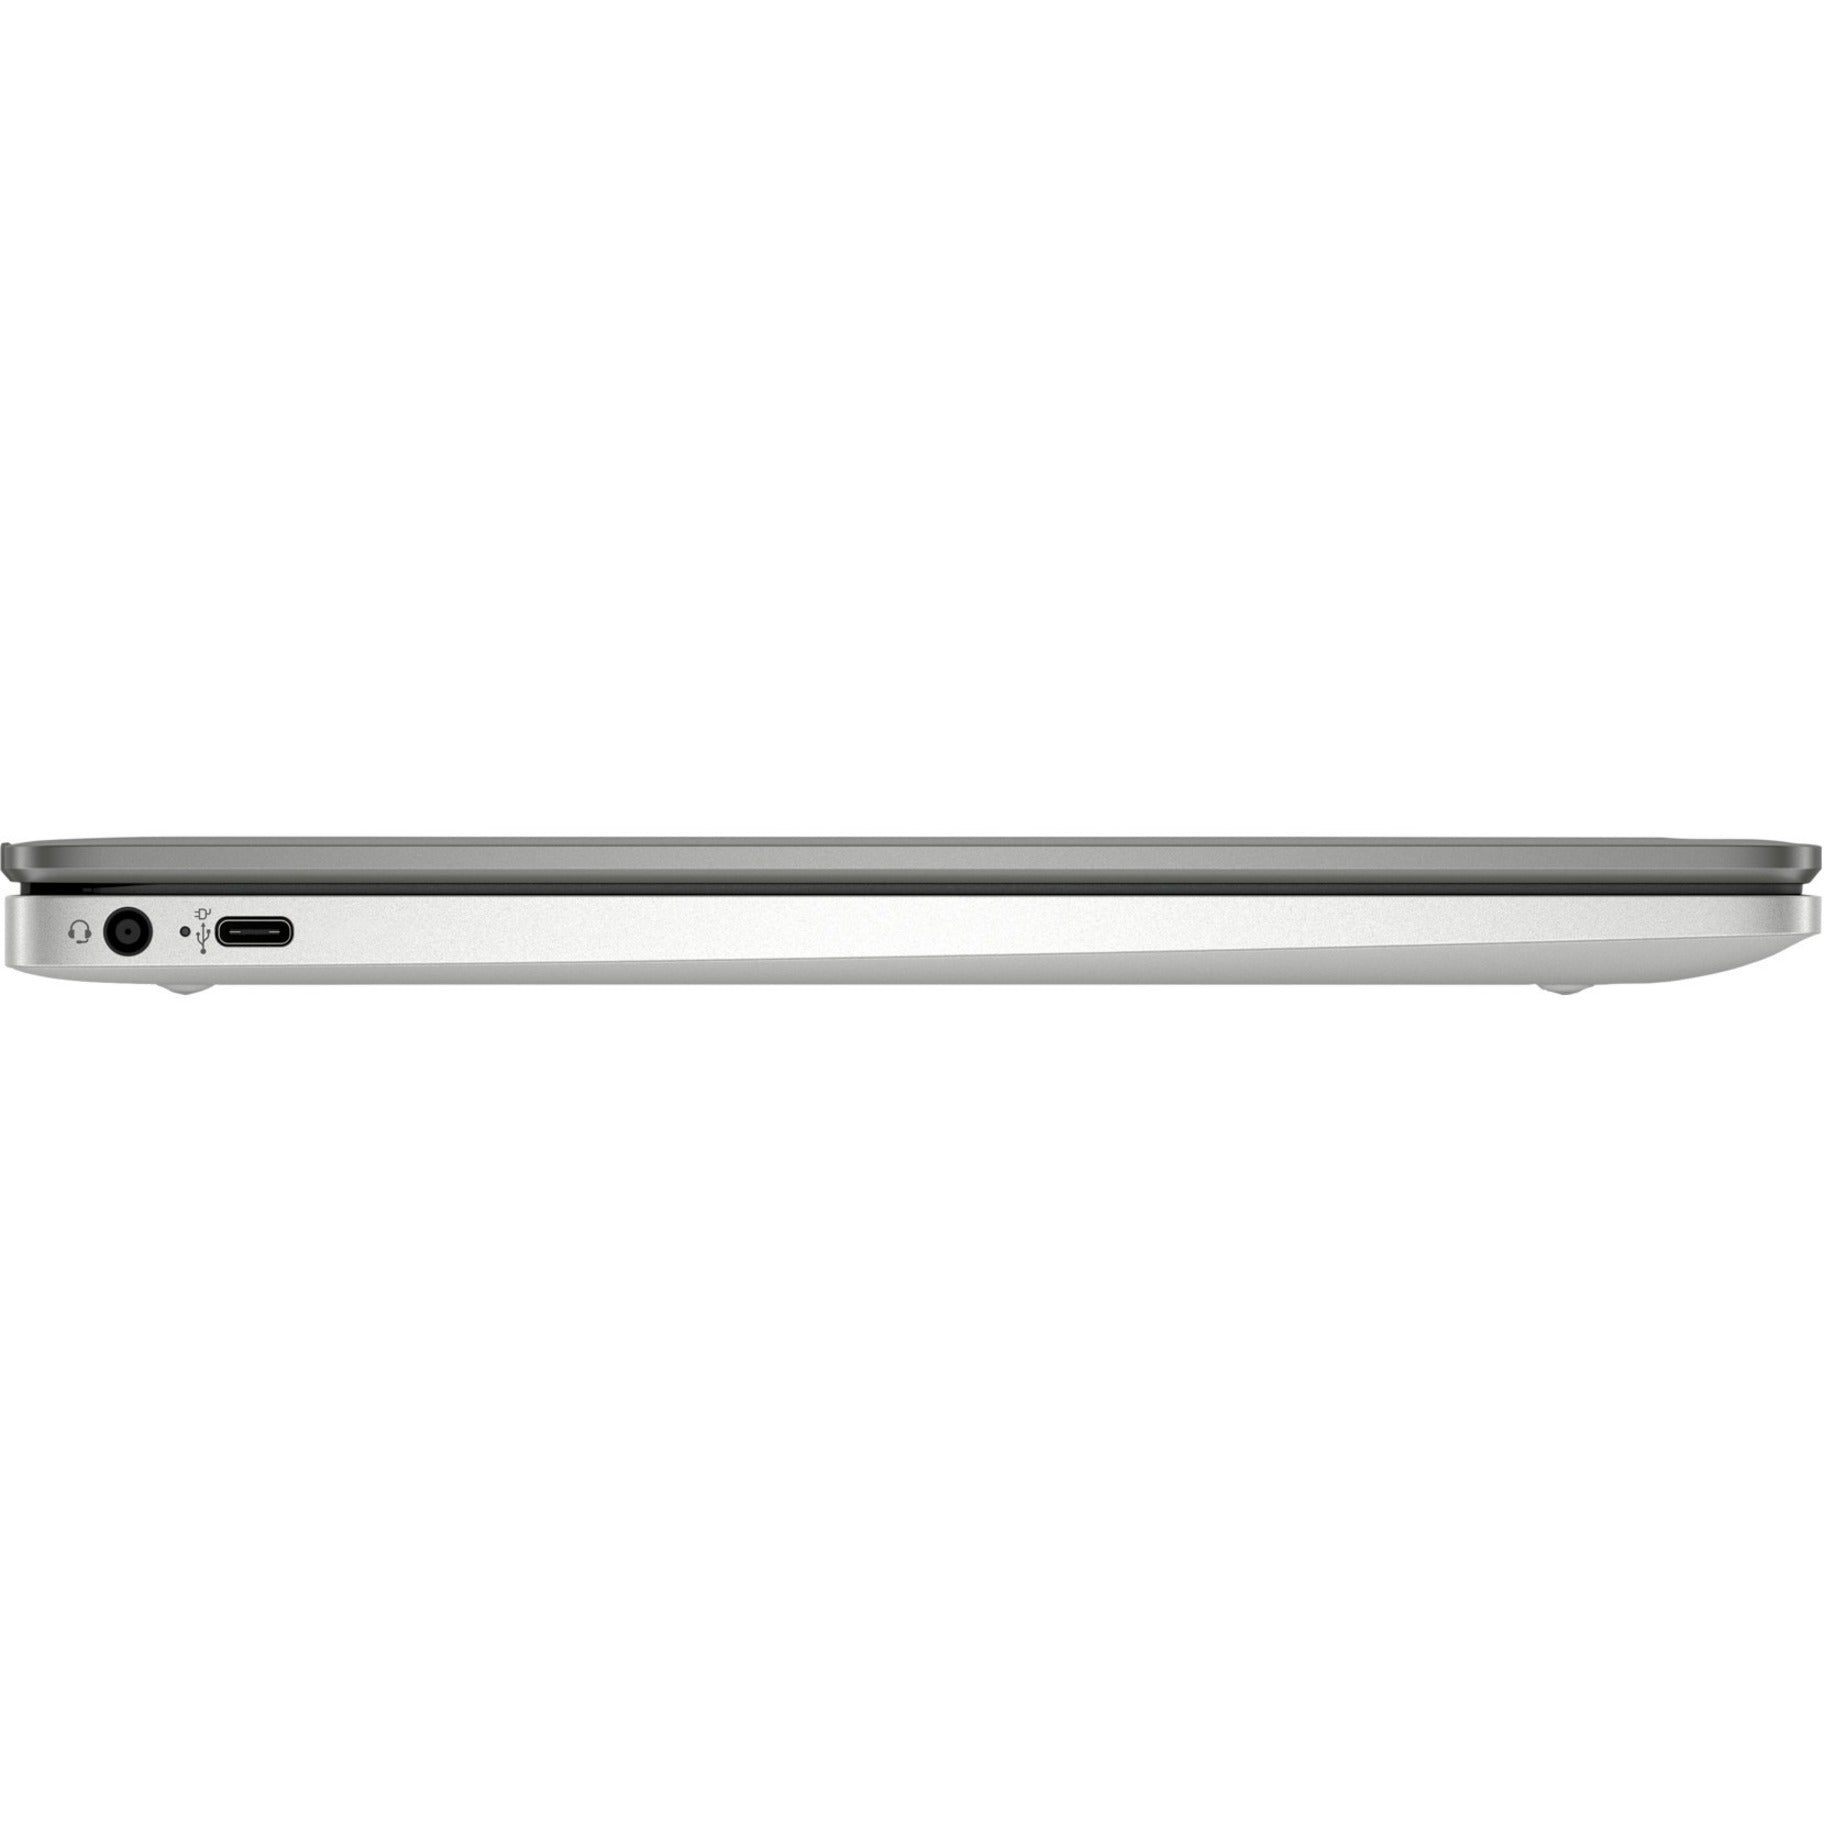 HP Chromebook 14a-na0230nr 14" Touchscreen Chromebook, Intel Celeron N4120 Quad-core, 4GB RAM, 64GB Flash Memory, Mineral Silver